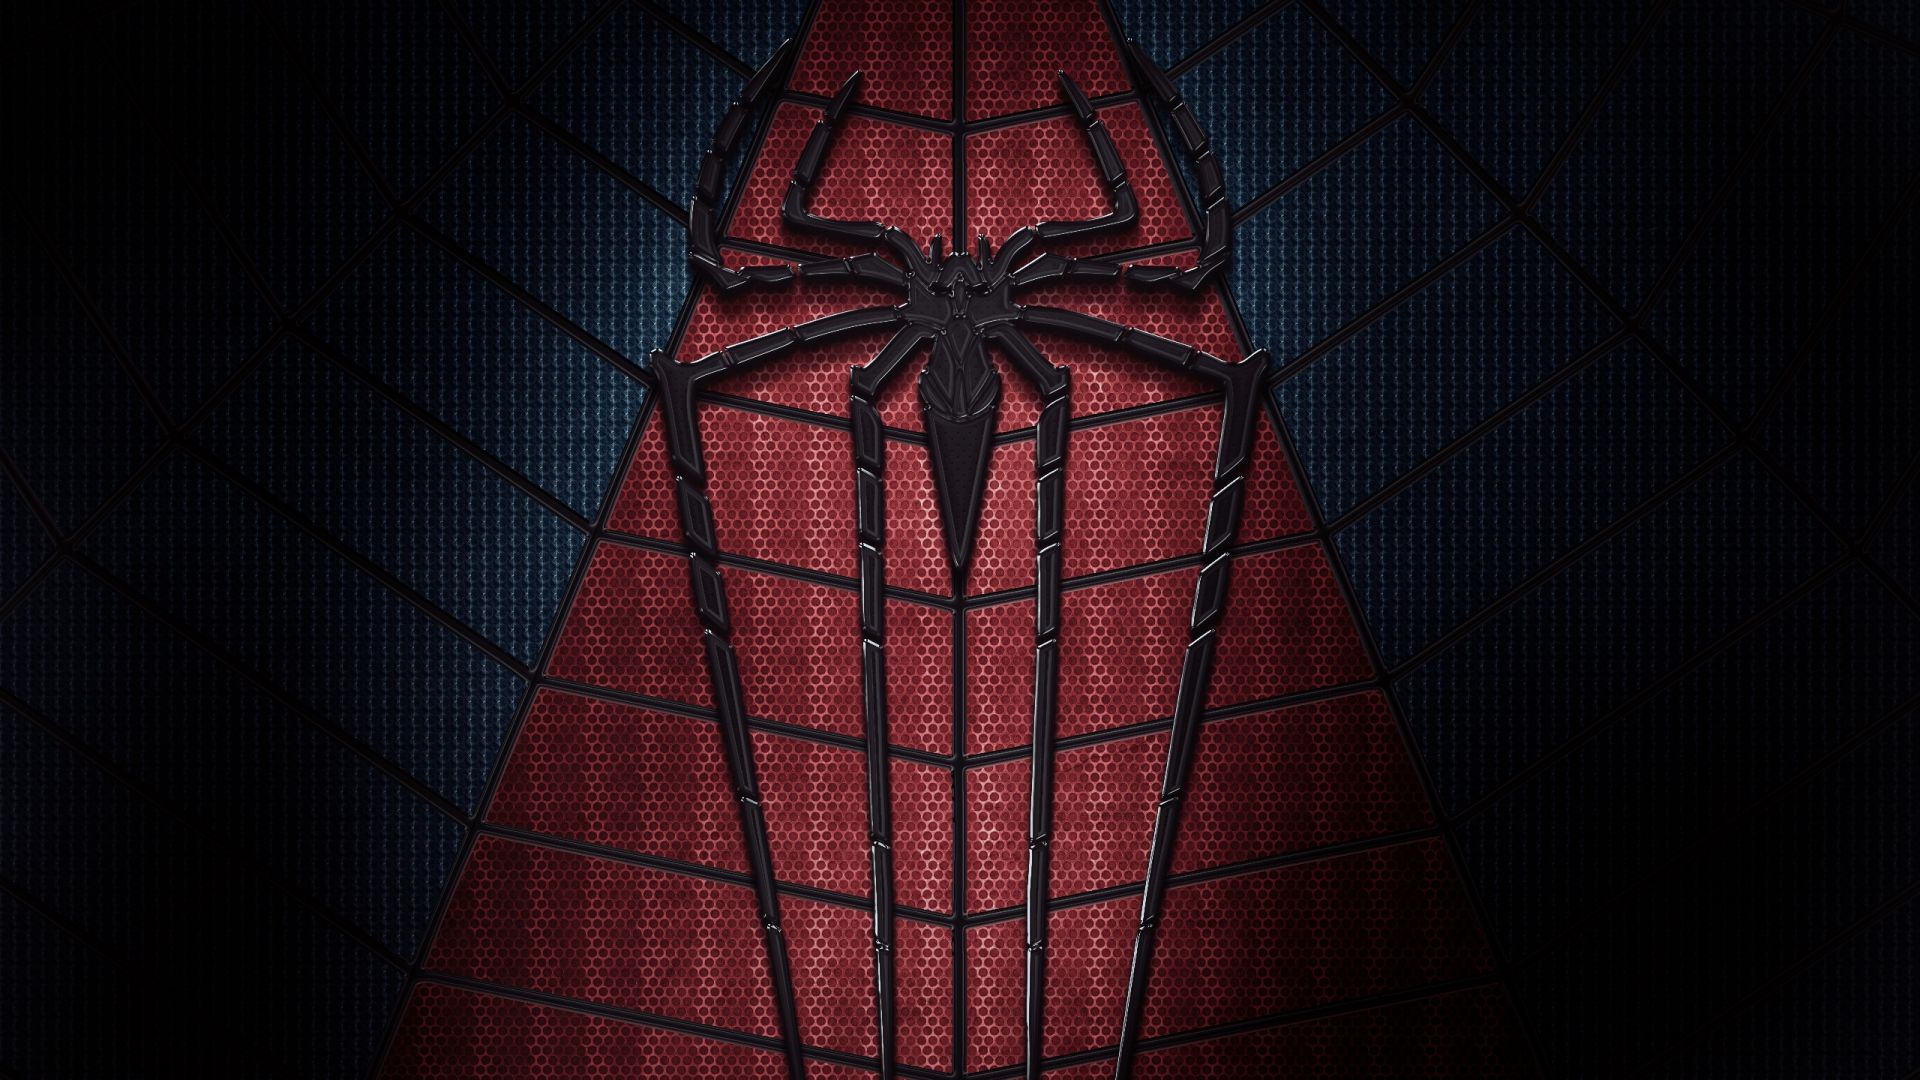 Download 1920x1080 HD Wallpaper the amazing spider man comics suit ...